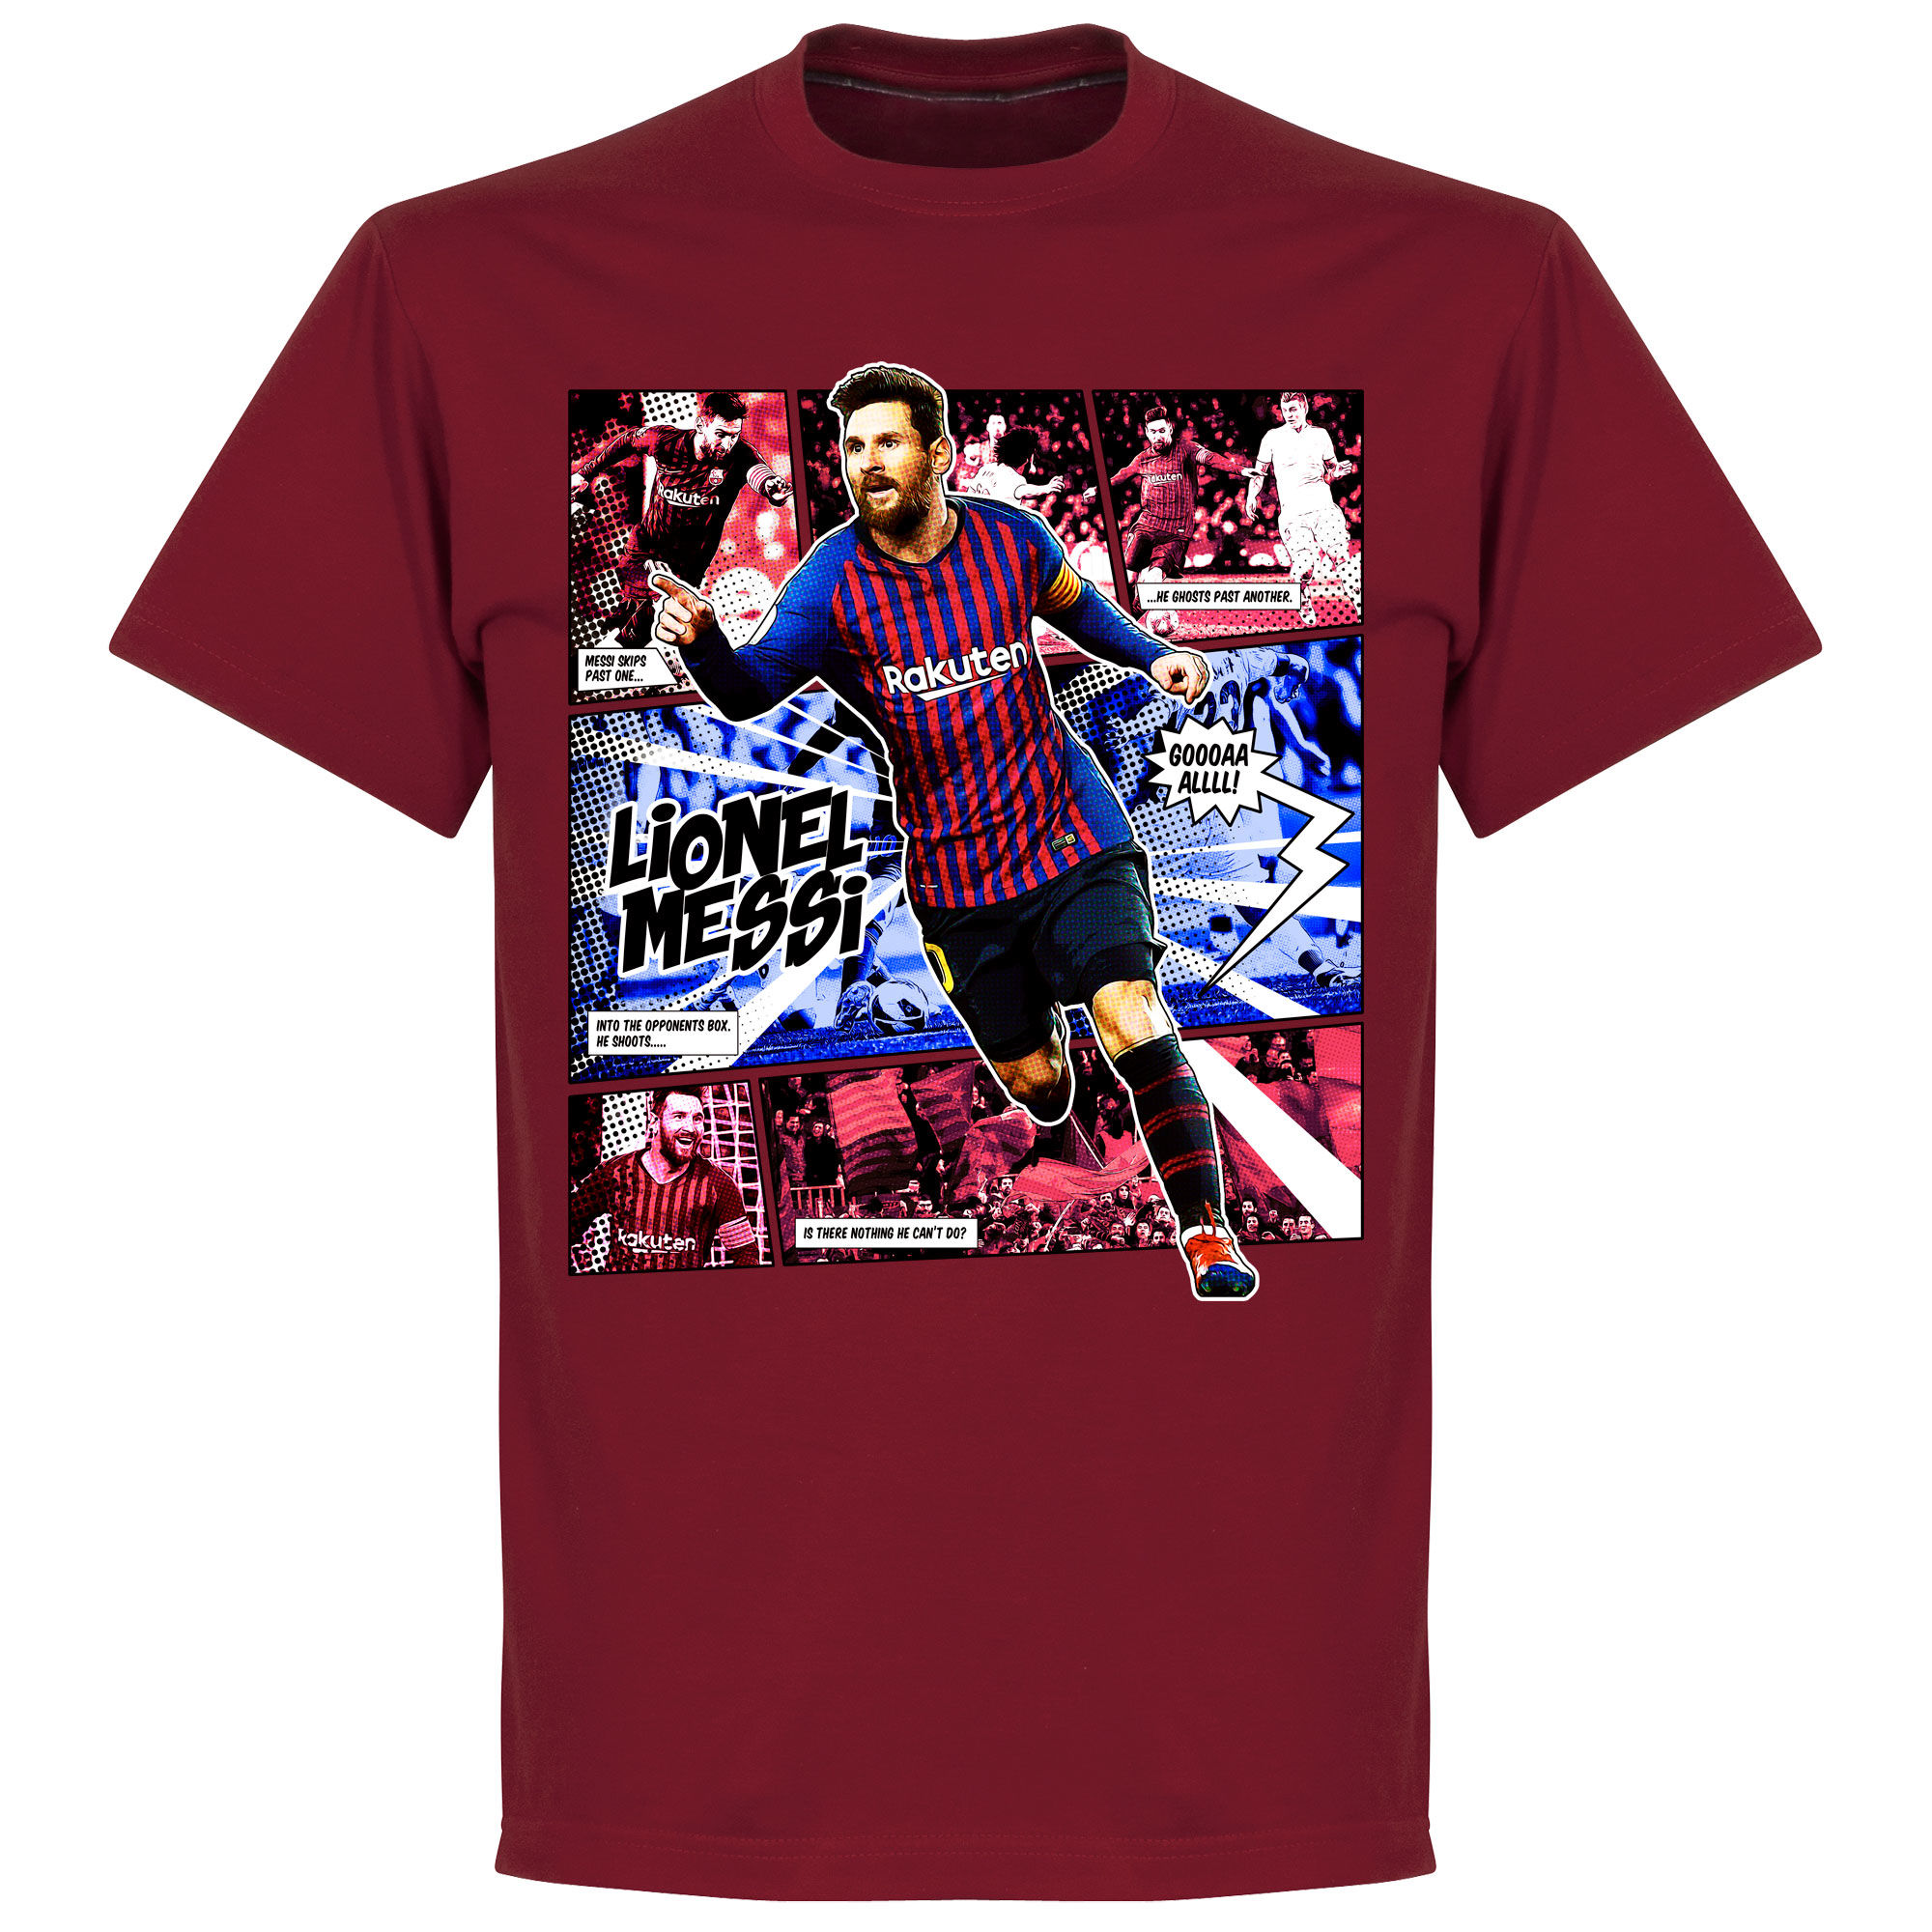 Barcelona - Tričko "Comic" - červené, Lionel Messi